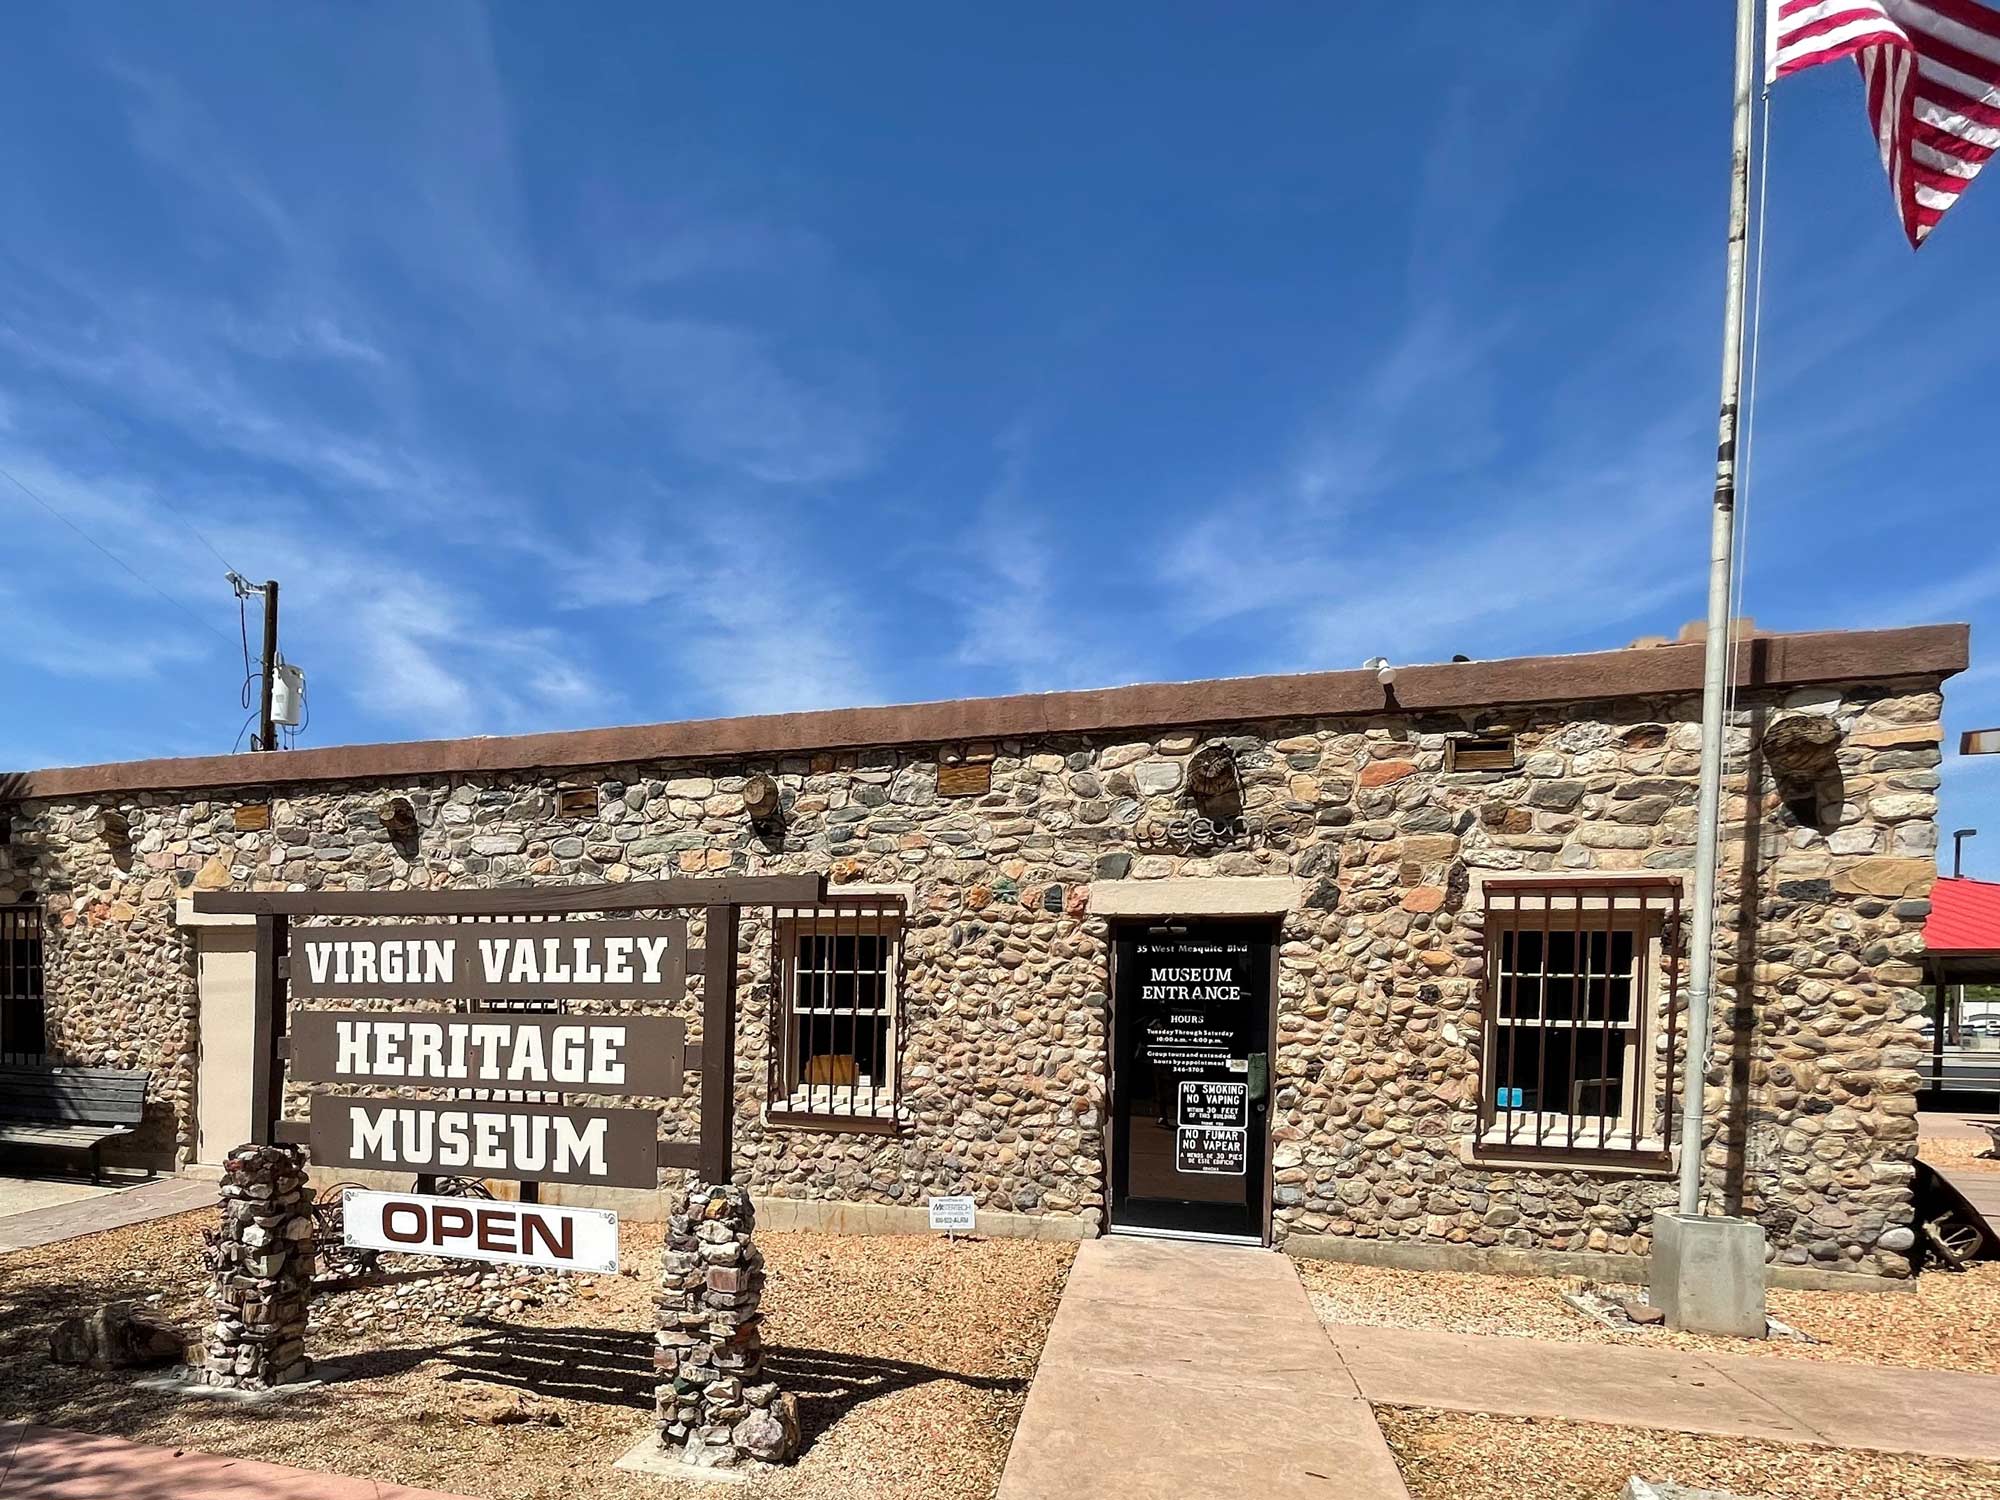 The Virgin Valley Heritage Museum